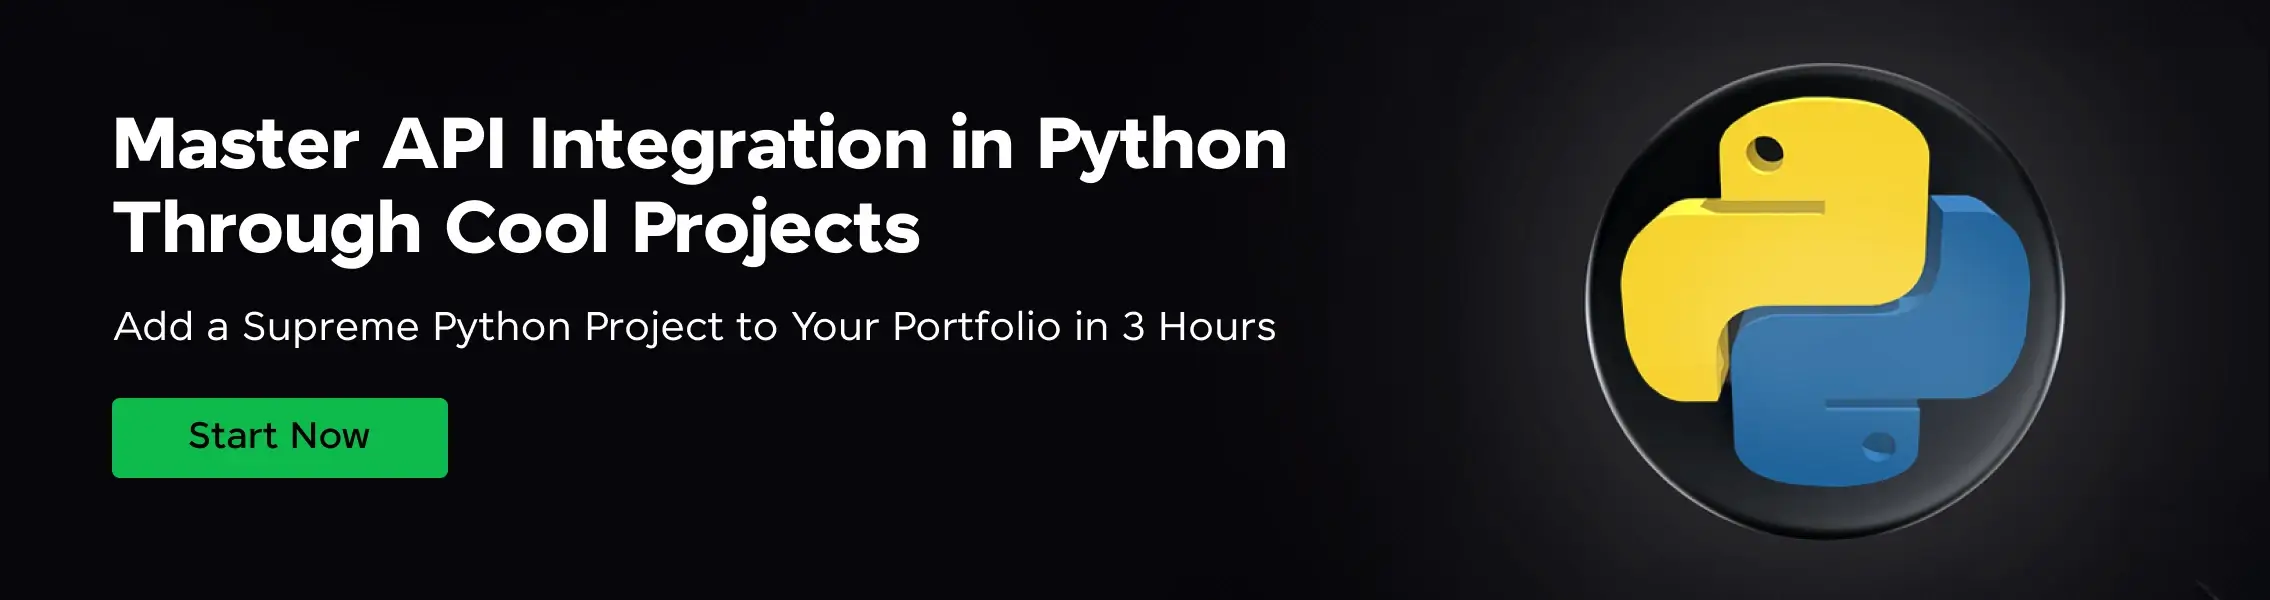 python project course desktop banner horizontal